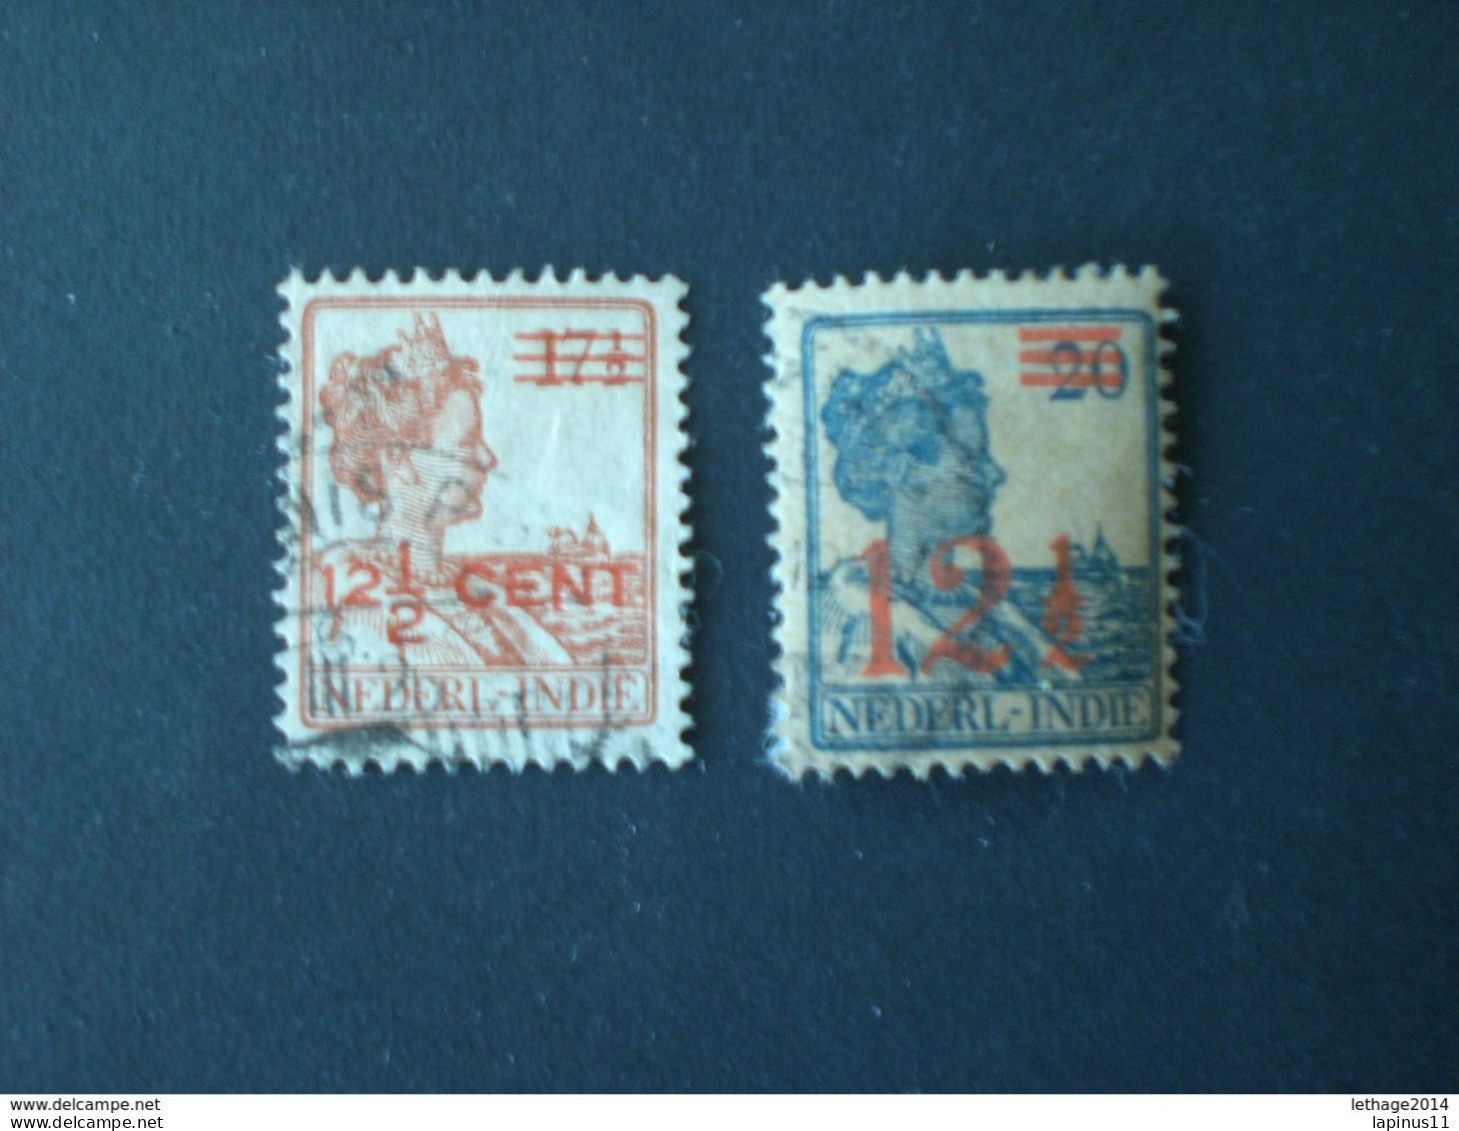 Nederlands-Indië Indie hollandaise 1870 -1888 King Wilhelm III + stock lot mix 16 SCANNERS